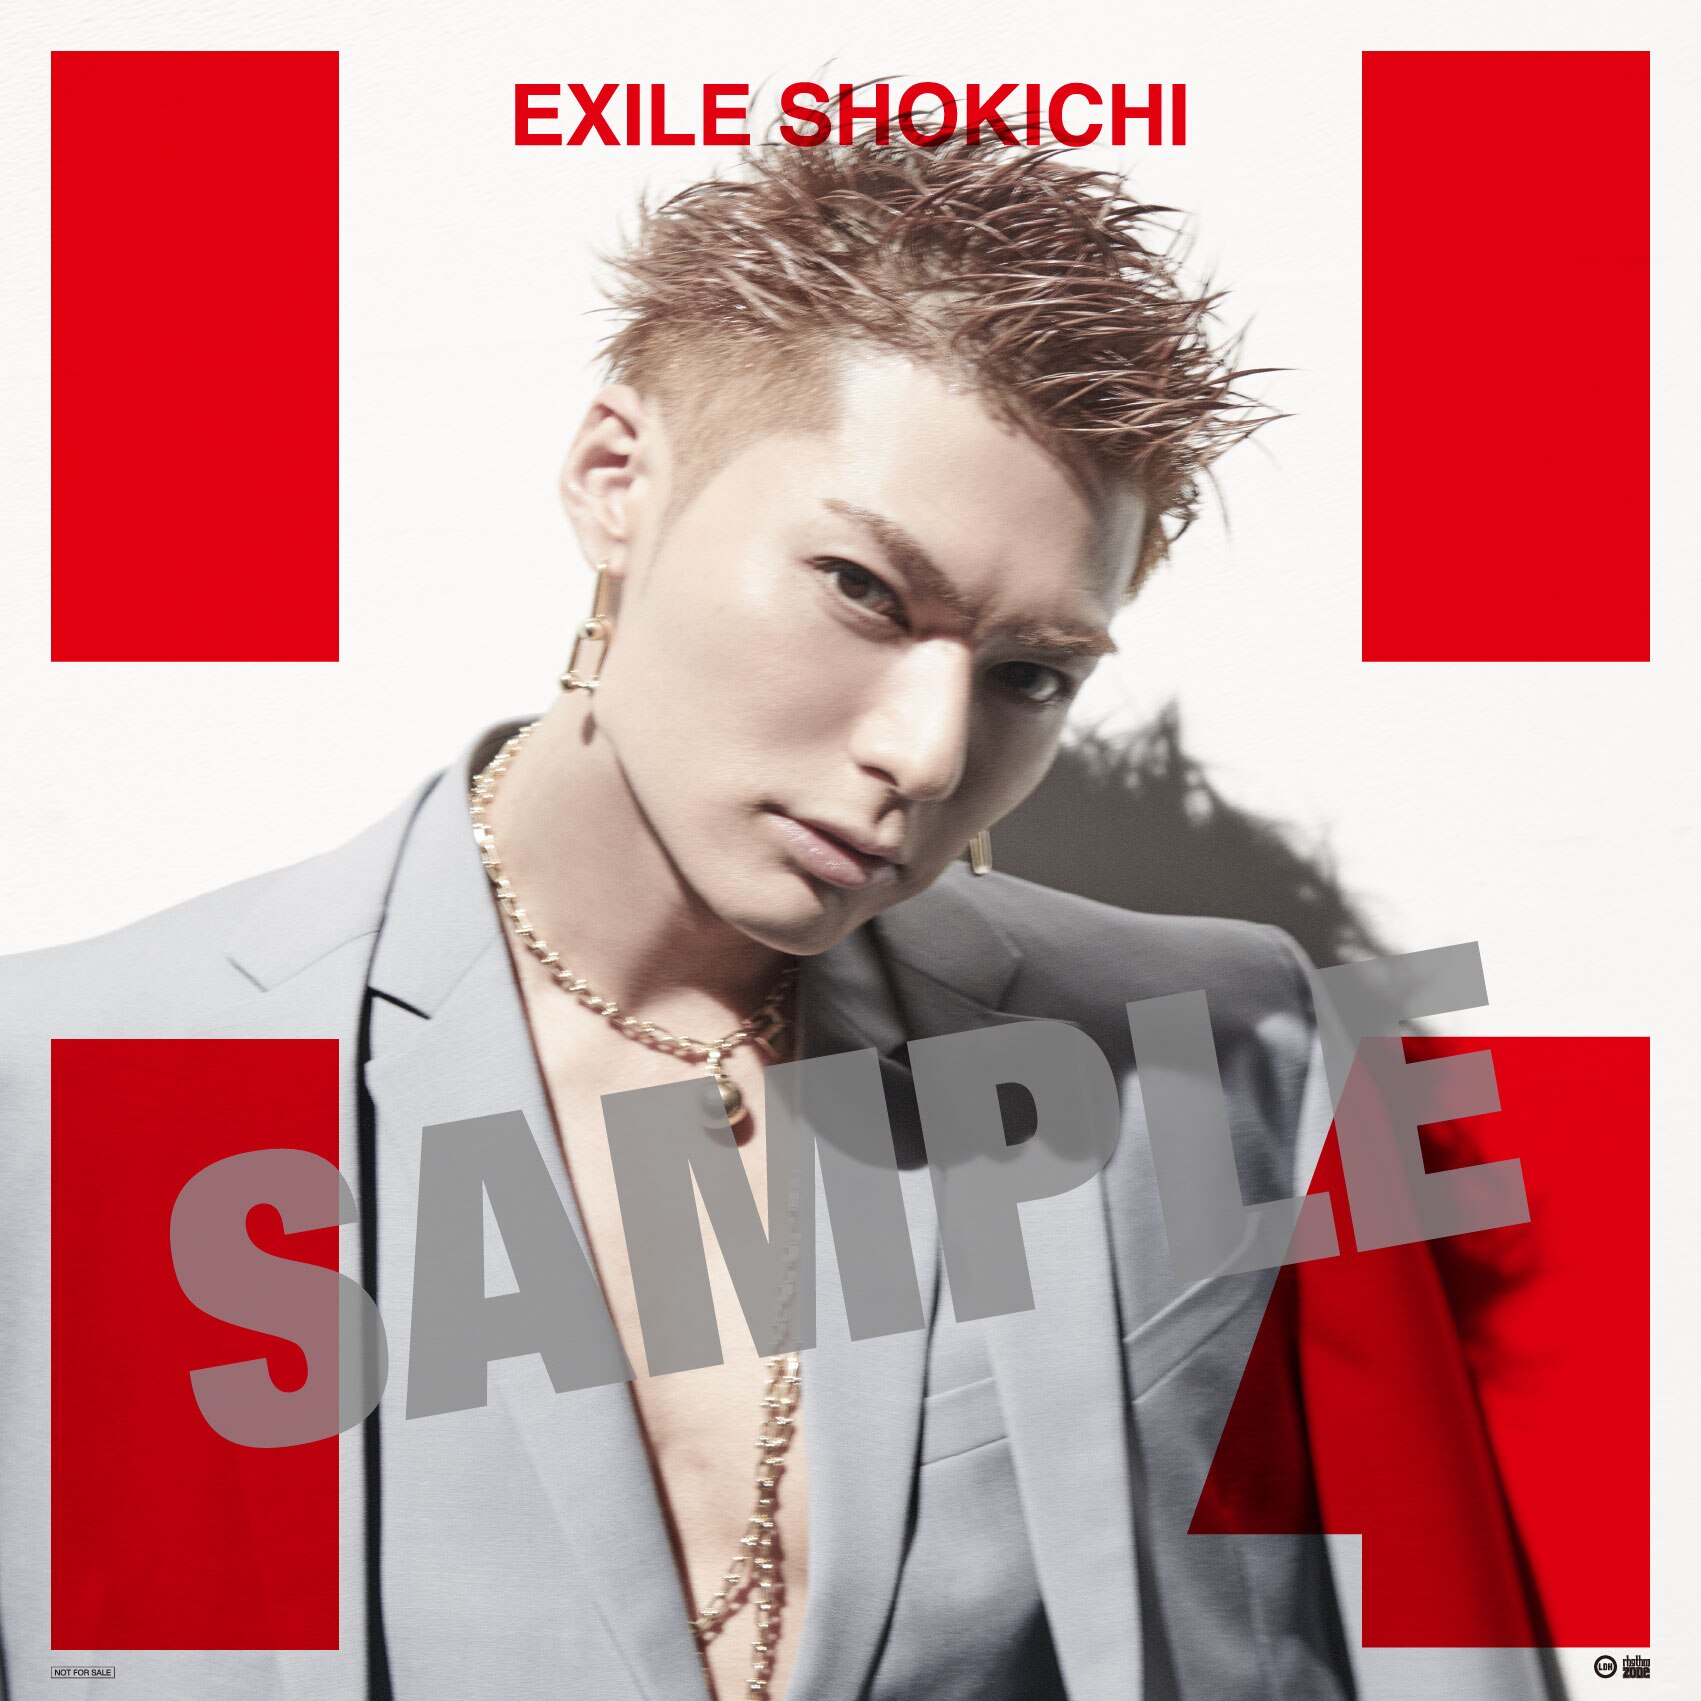 News Exile Shokichi ニュー アルバム 1114 全国cd Shop共通特典デザイン決定 Exile Shokichi